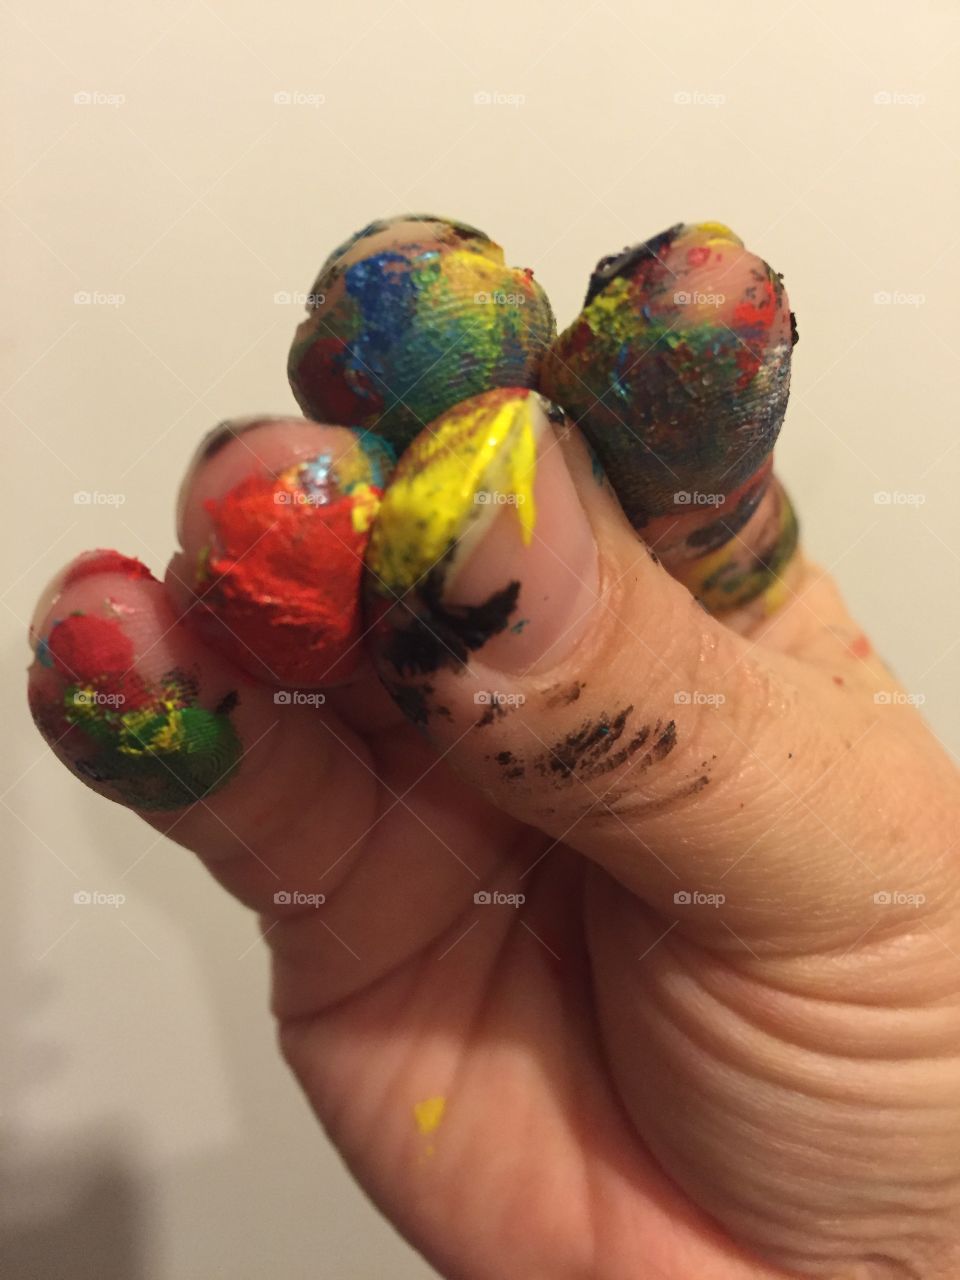 Painting hand - fingertips